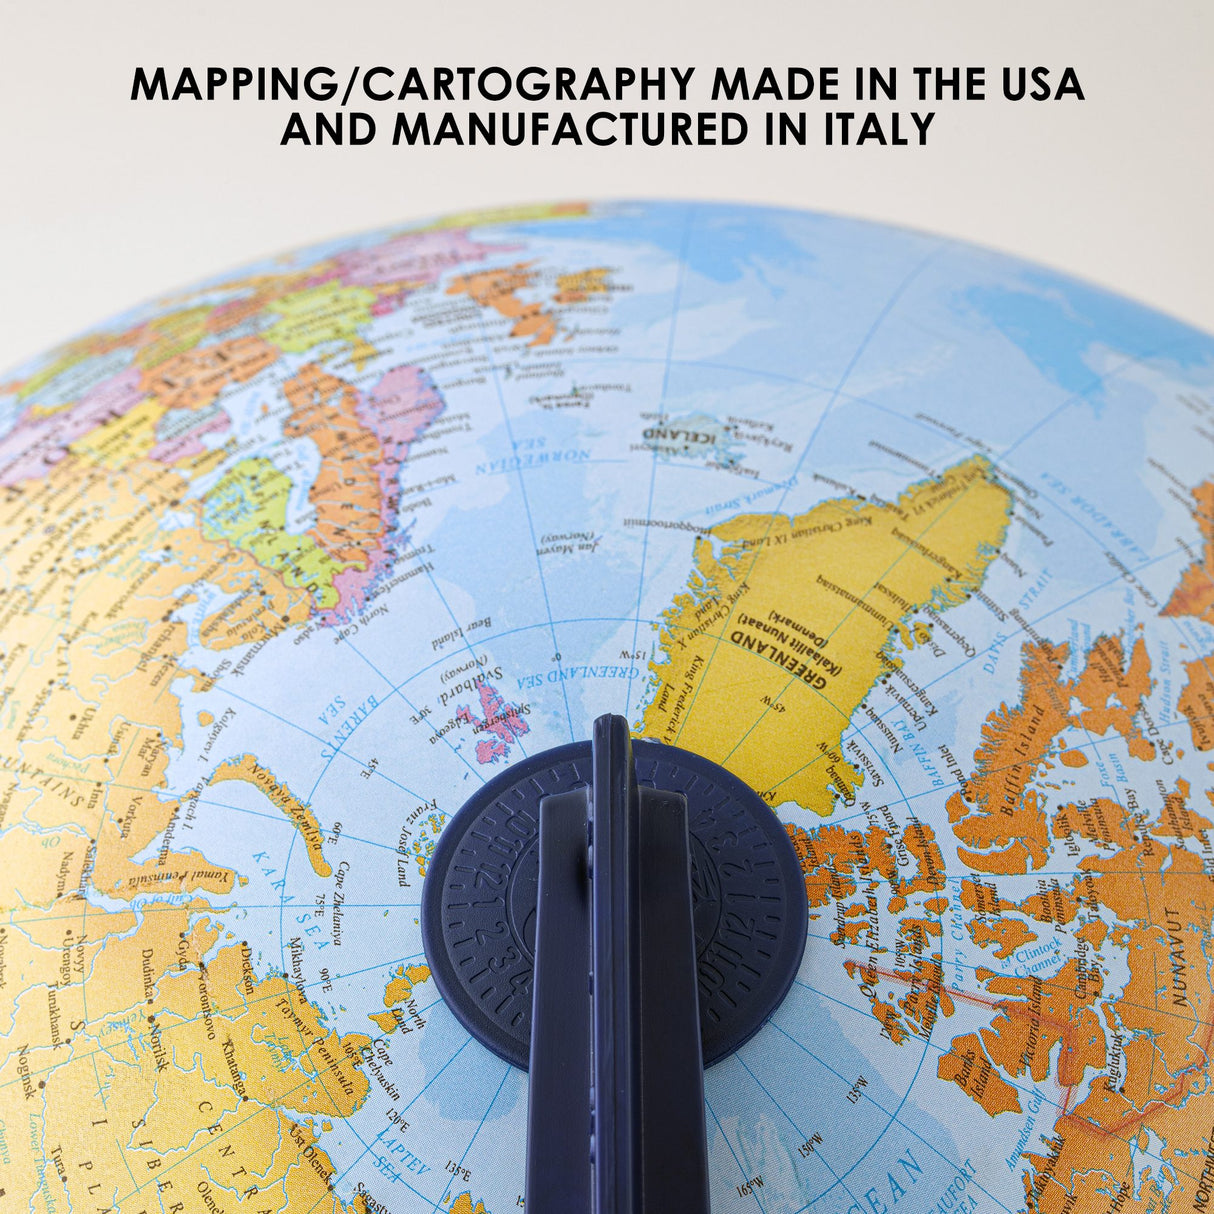 Scout Globe + Bonus USA & World Map - WP11201 - Ultimate Globes